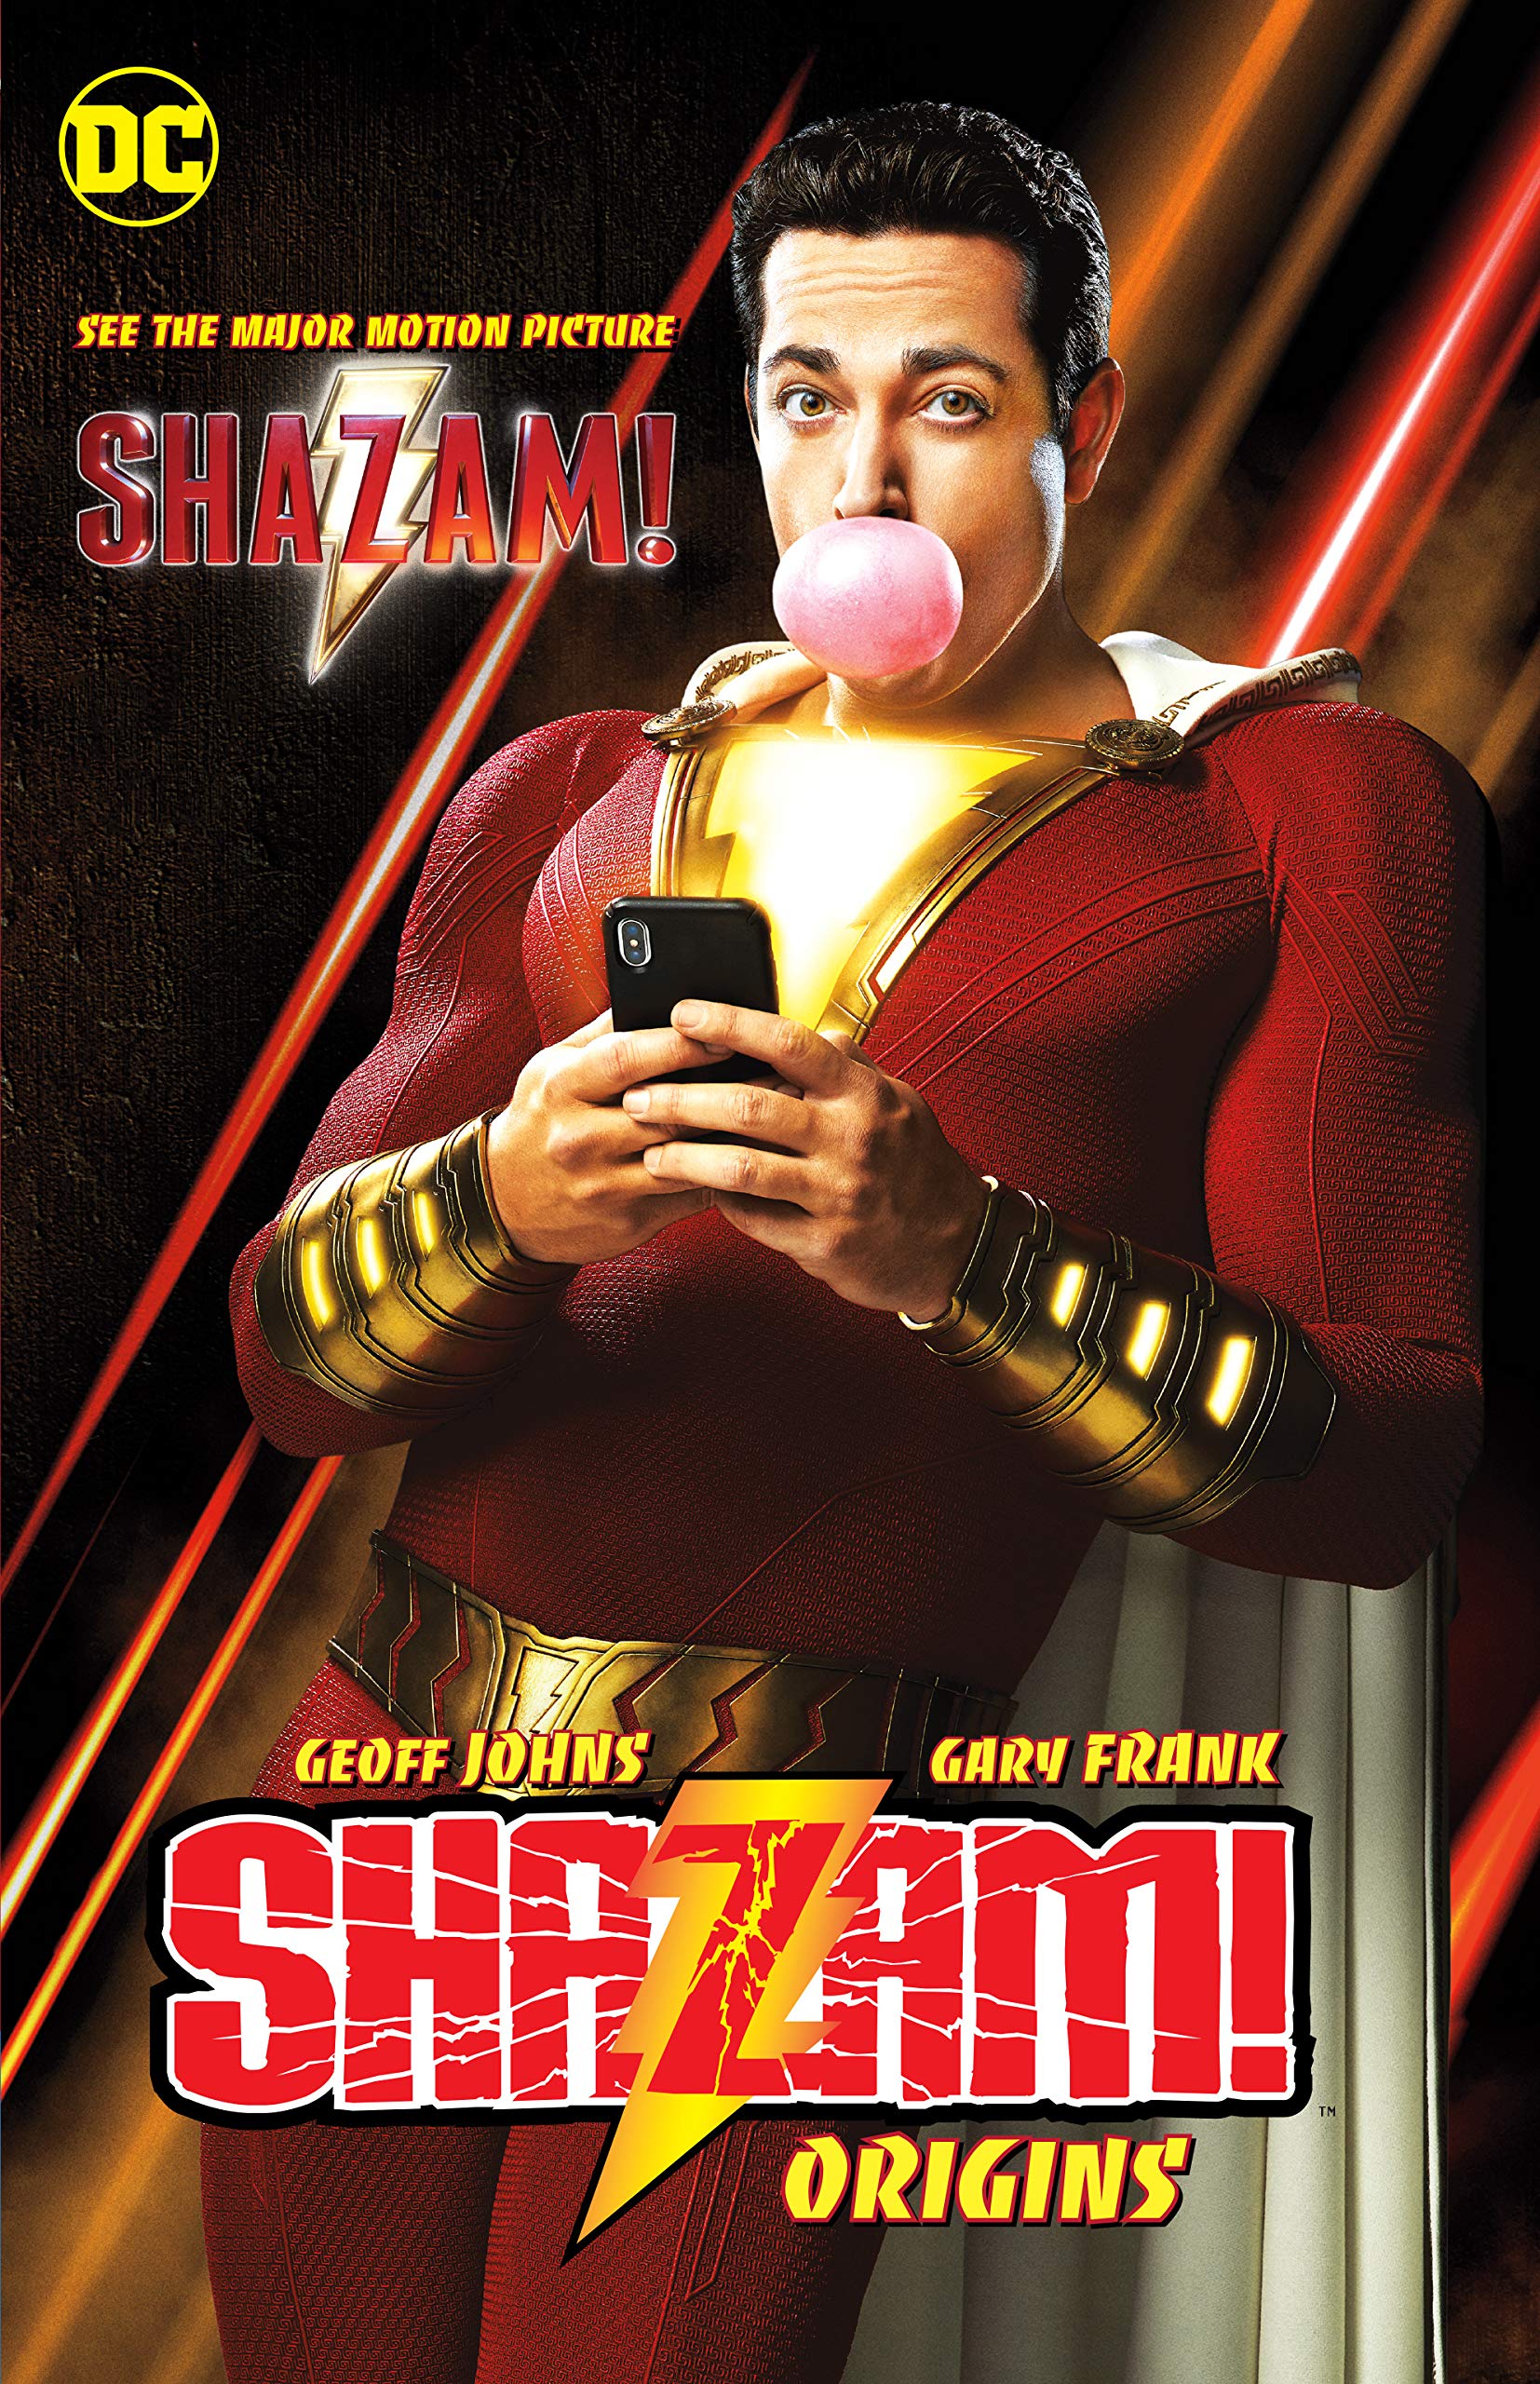 Shazam 2019 Full Movie In Hindi Dubbed download full movie